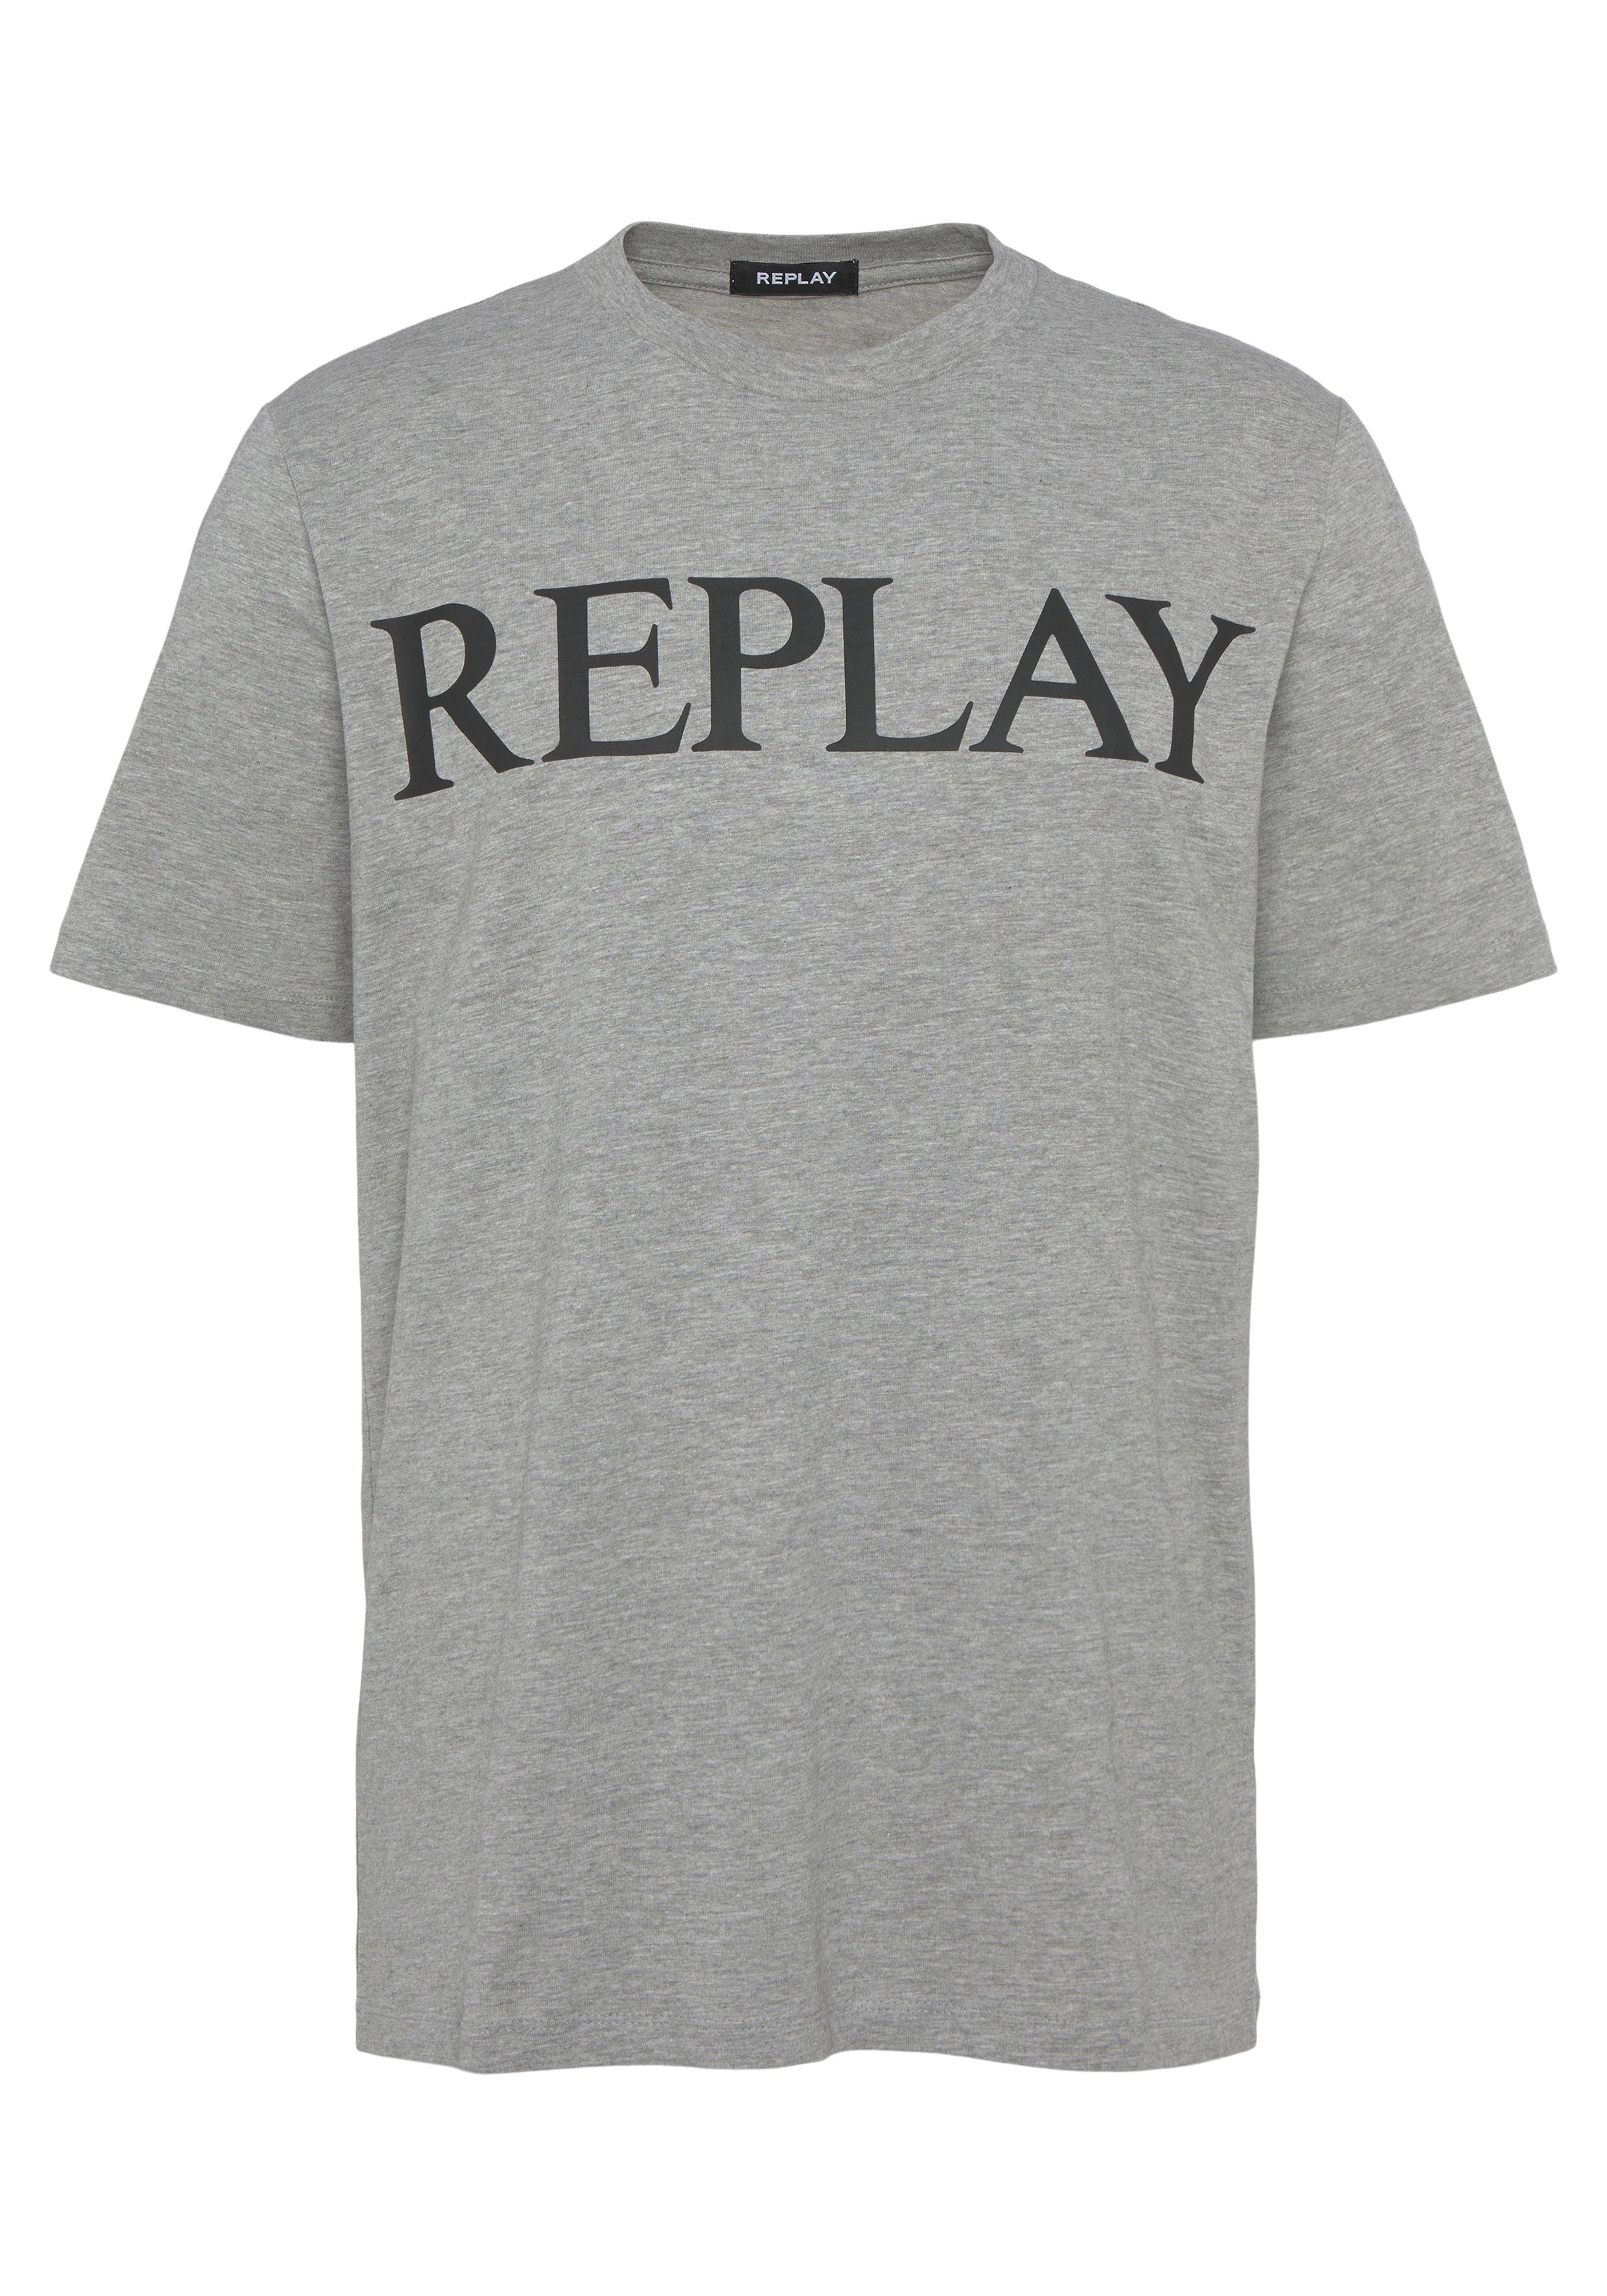 Replay grey T-Shirt light melange